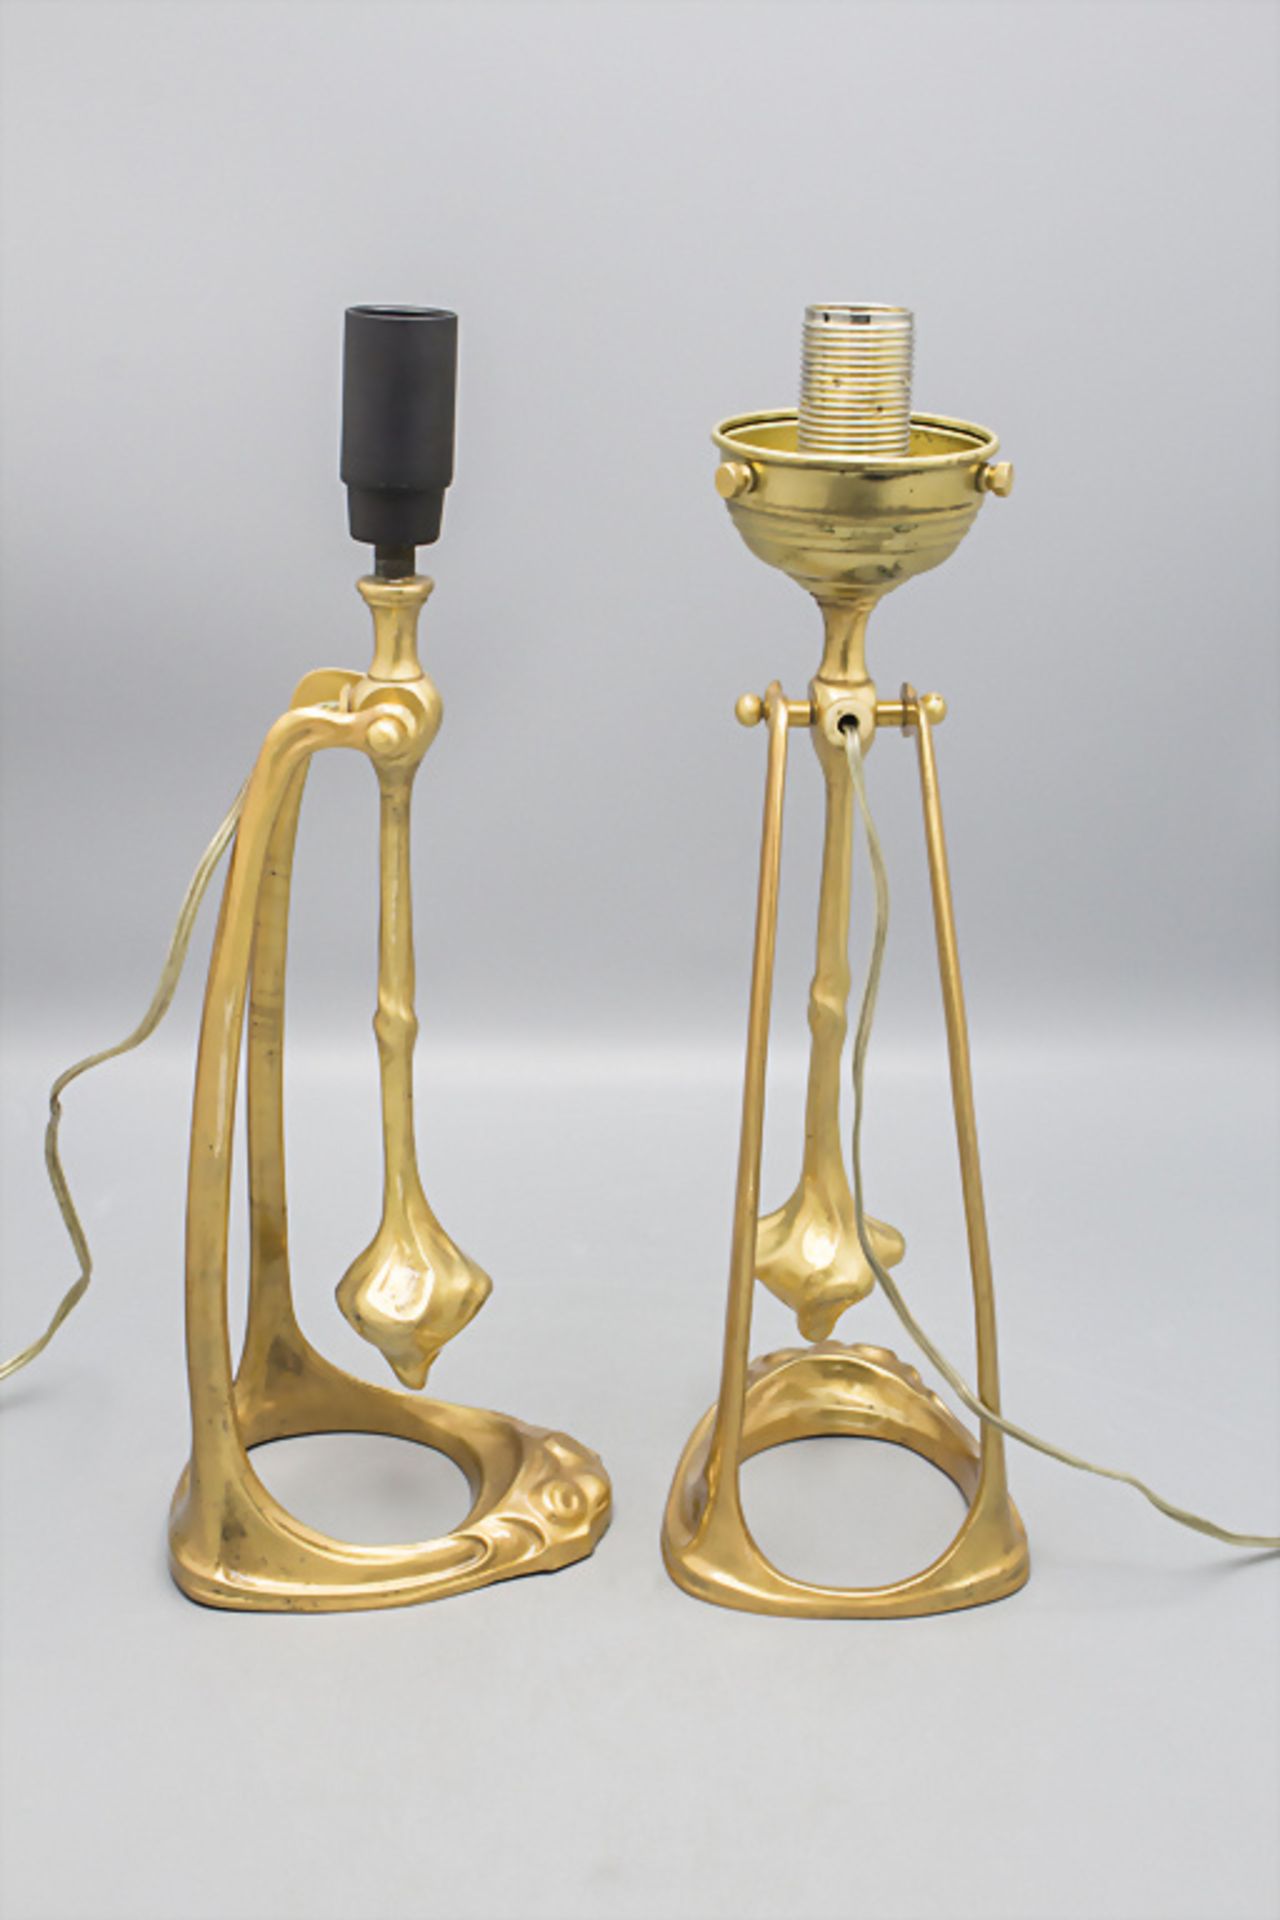 Paar Jugendstil Lampenfüße / A pair of Art Nouveau lamp bases - Bild 2 aus 2